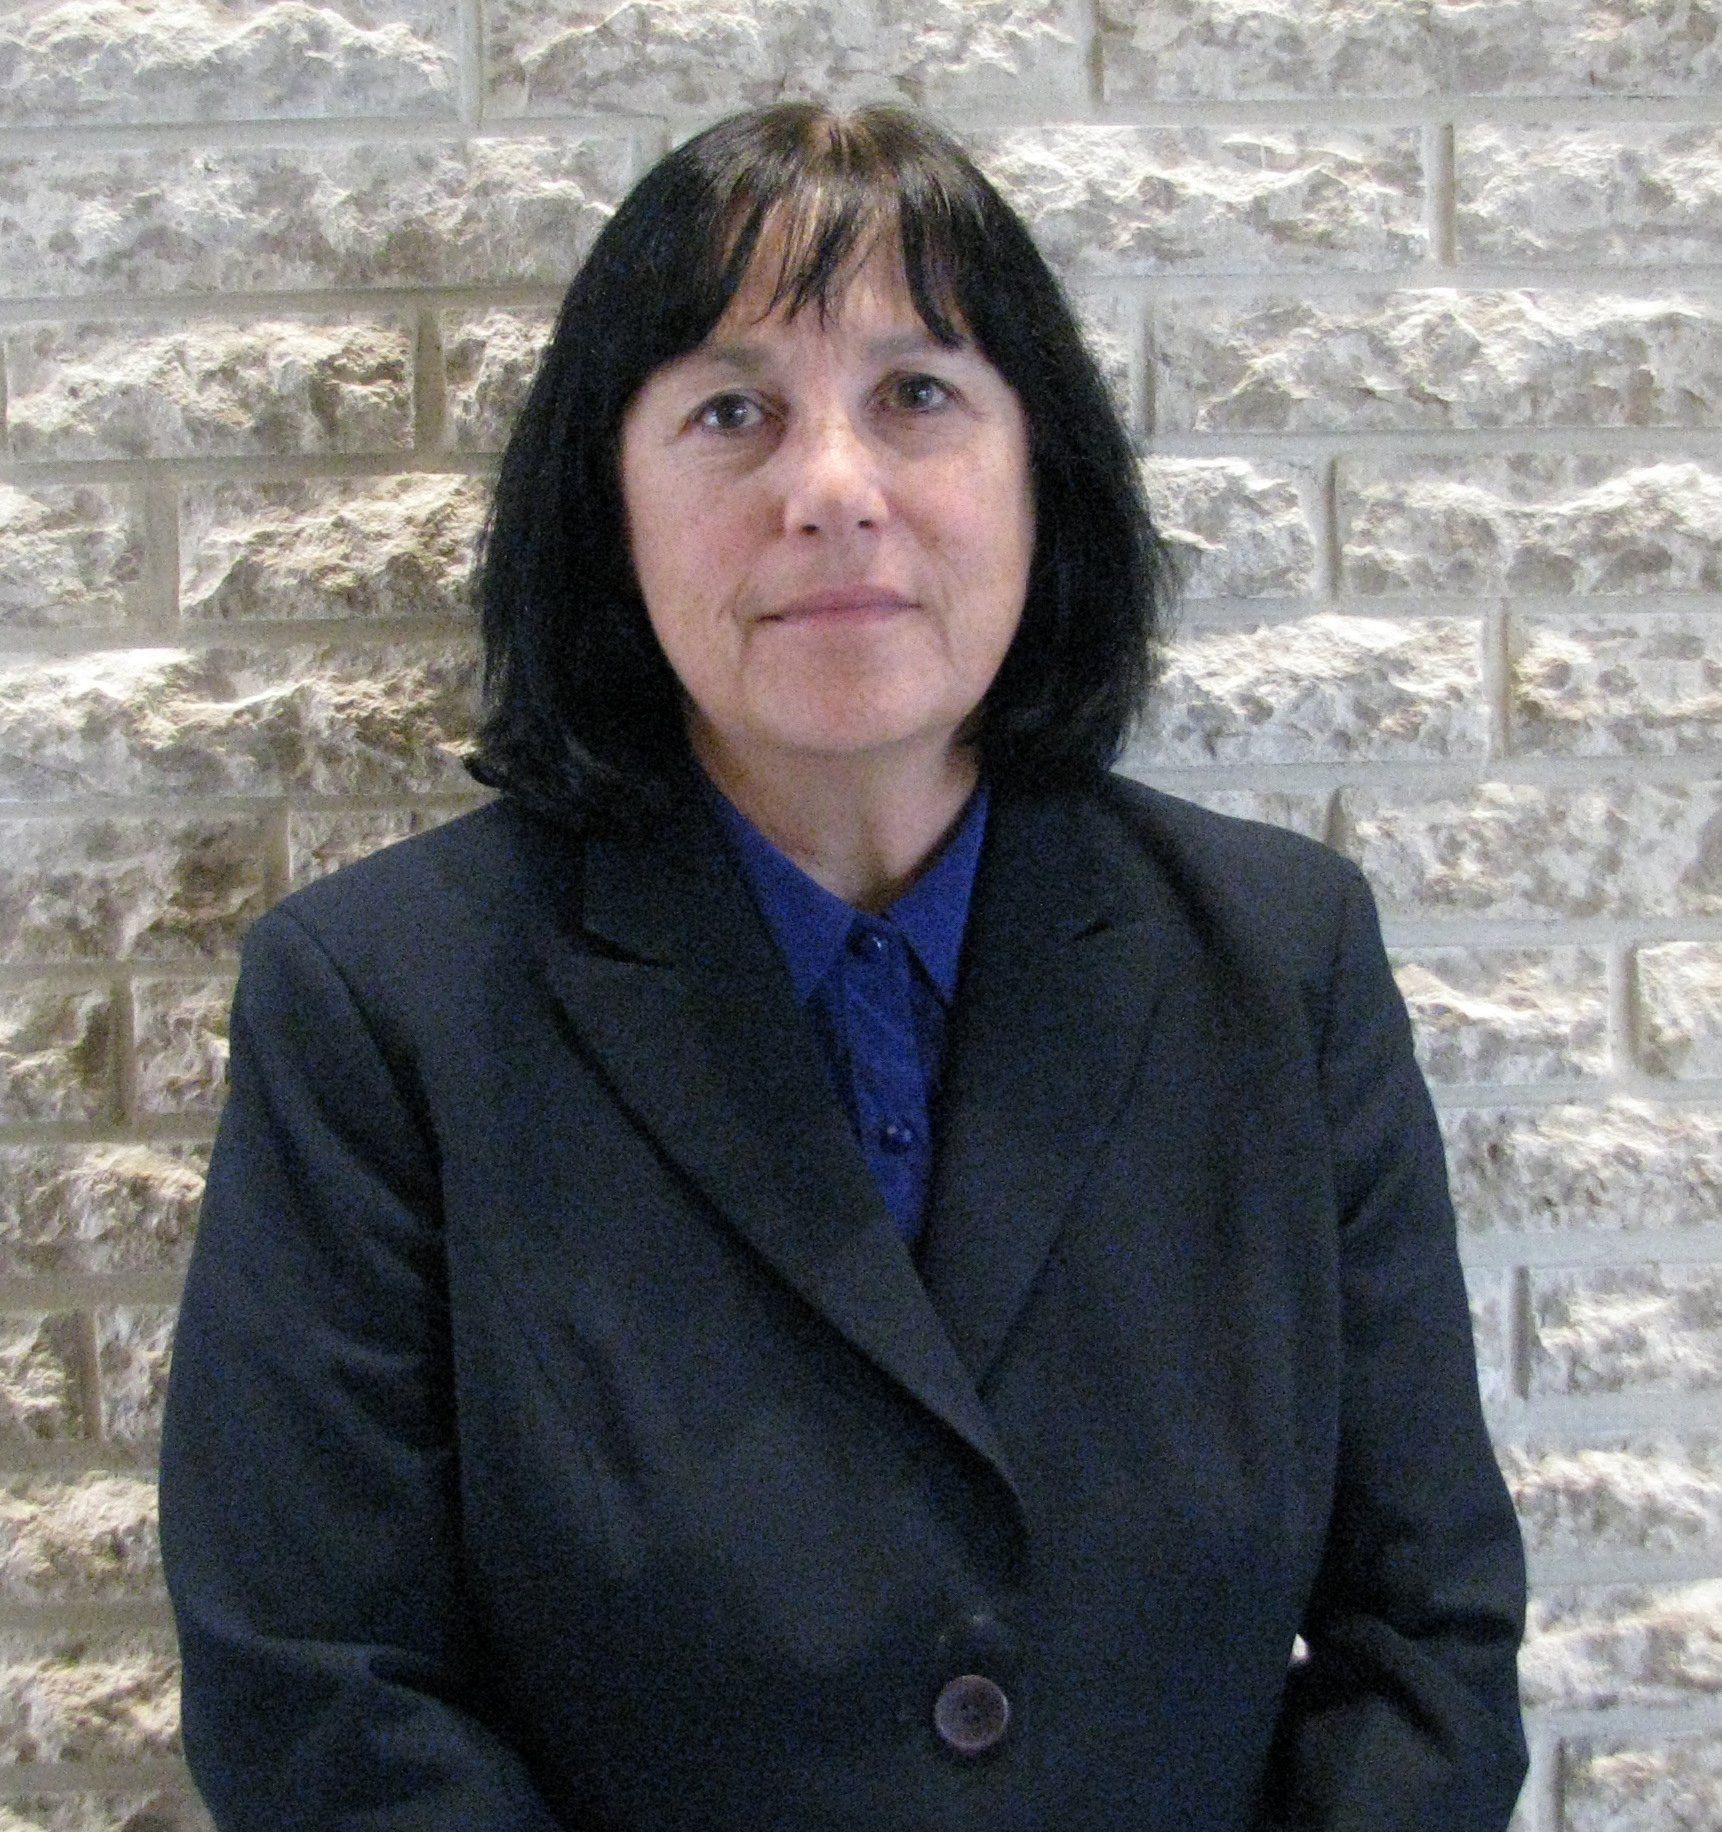 Janice Dryden funeral director